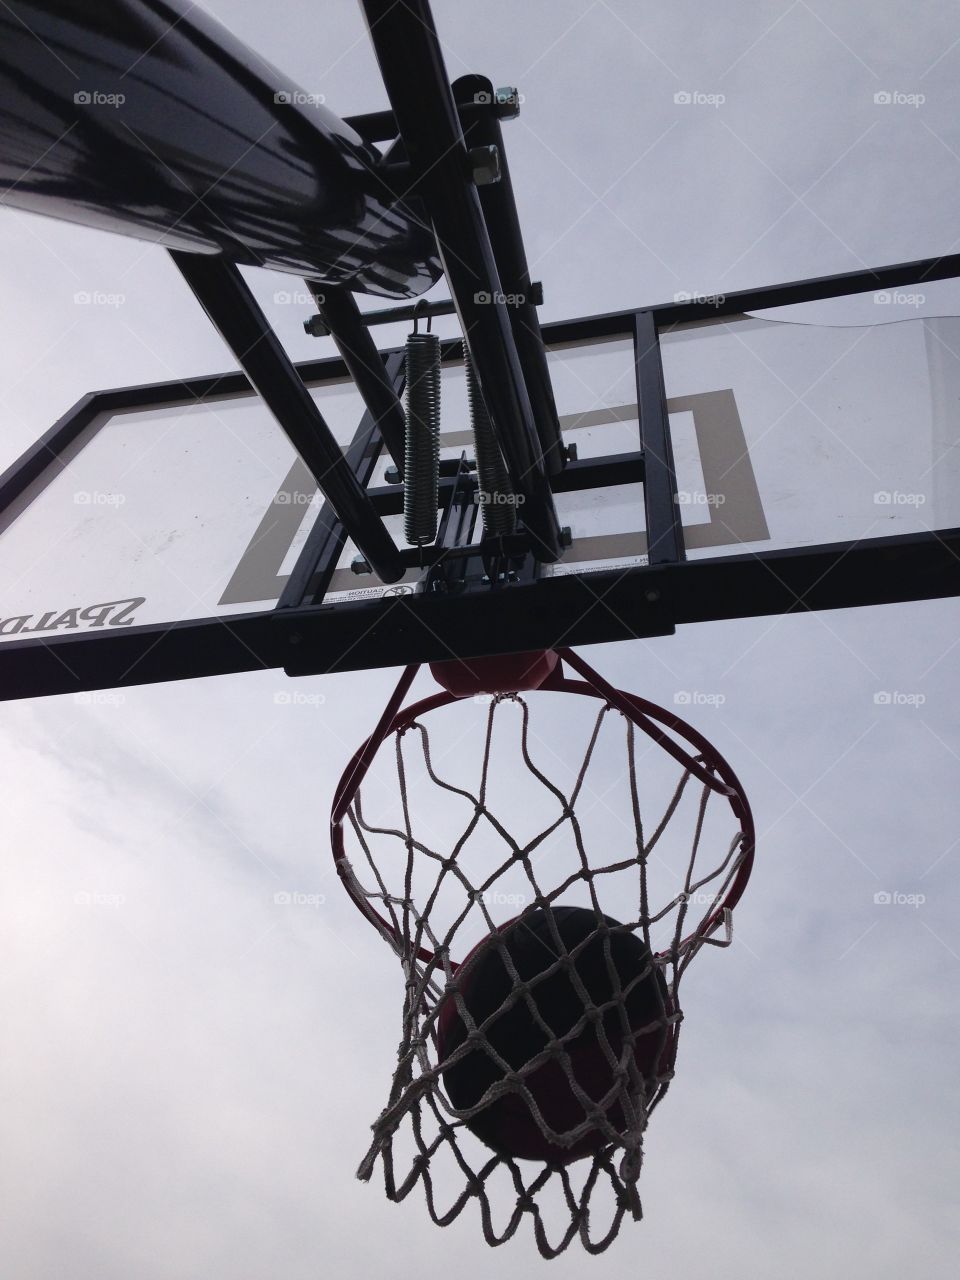 Hoops. Basketball Going through hoop